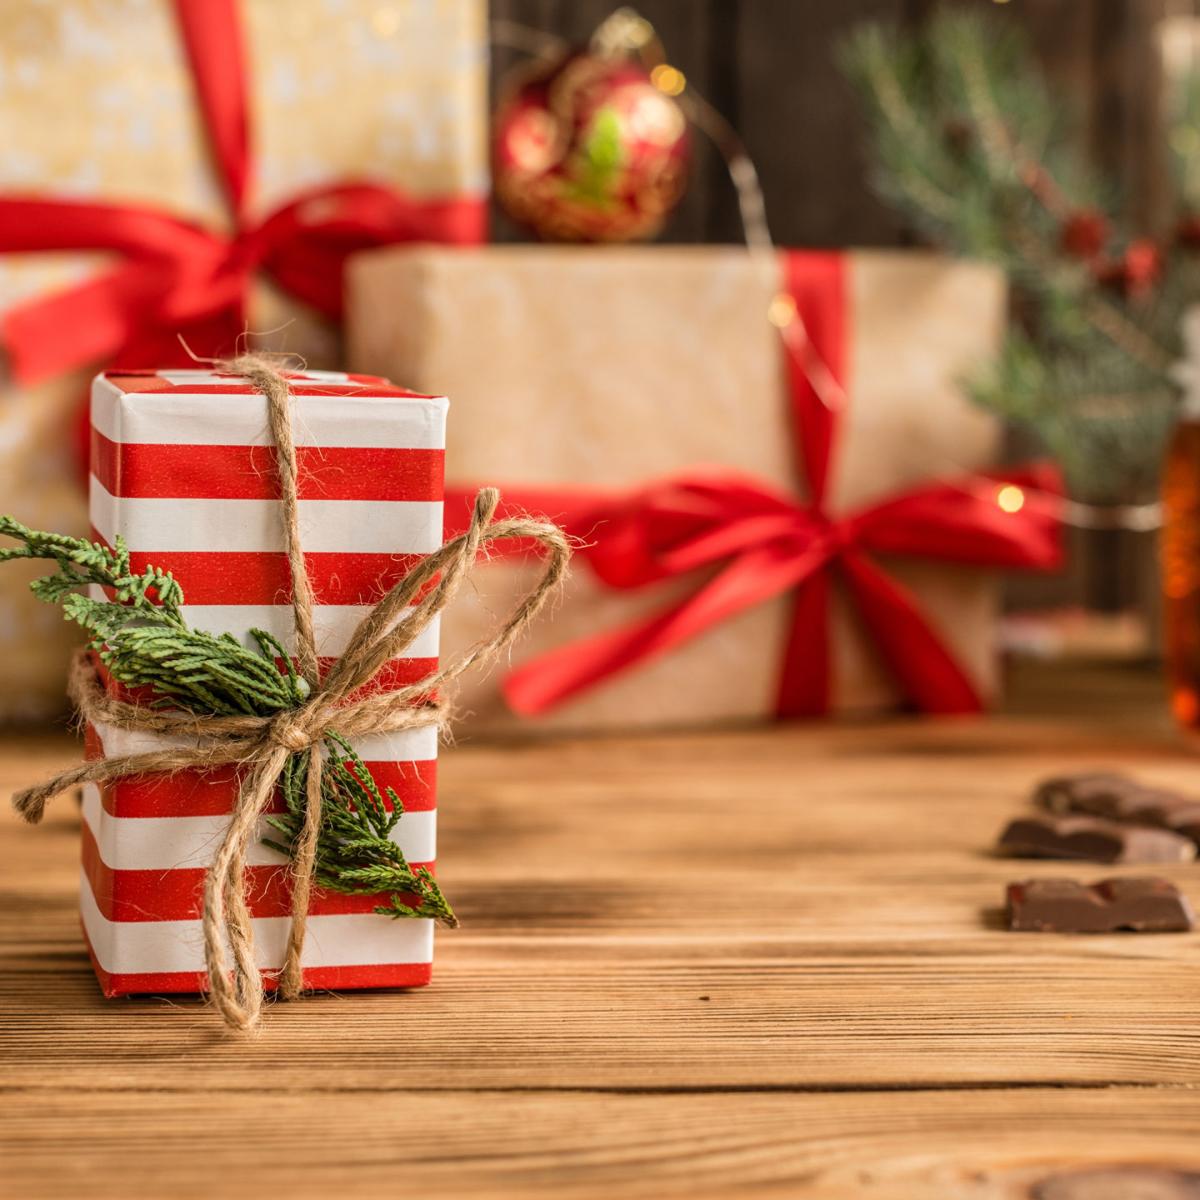 Holiday Food and Gift 2021